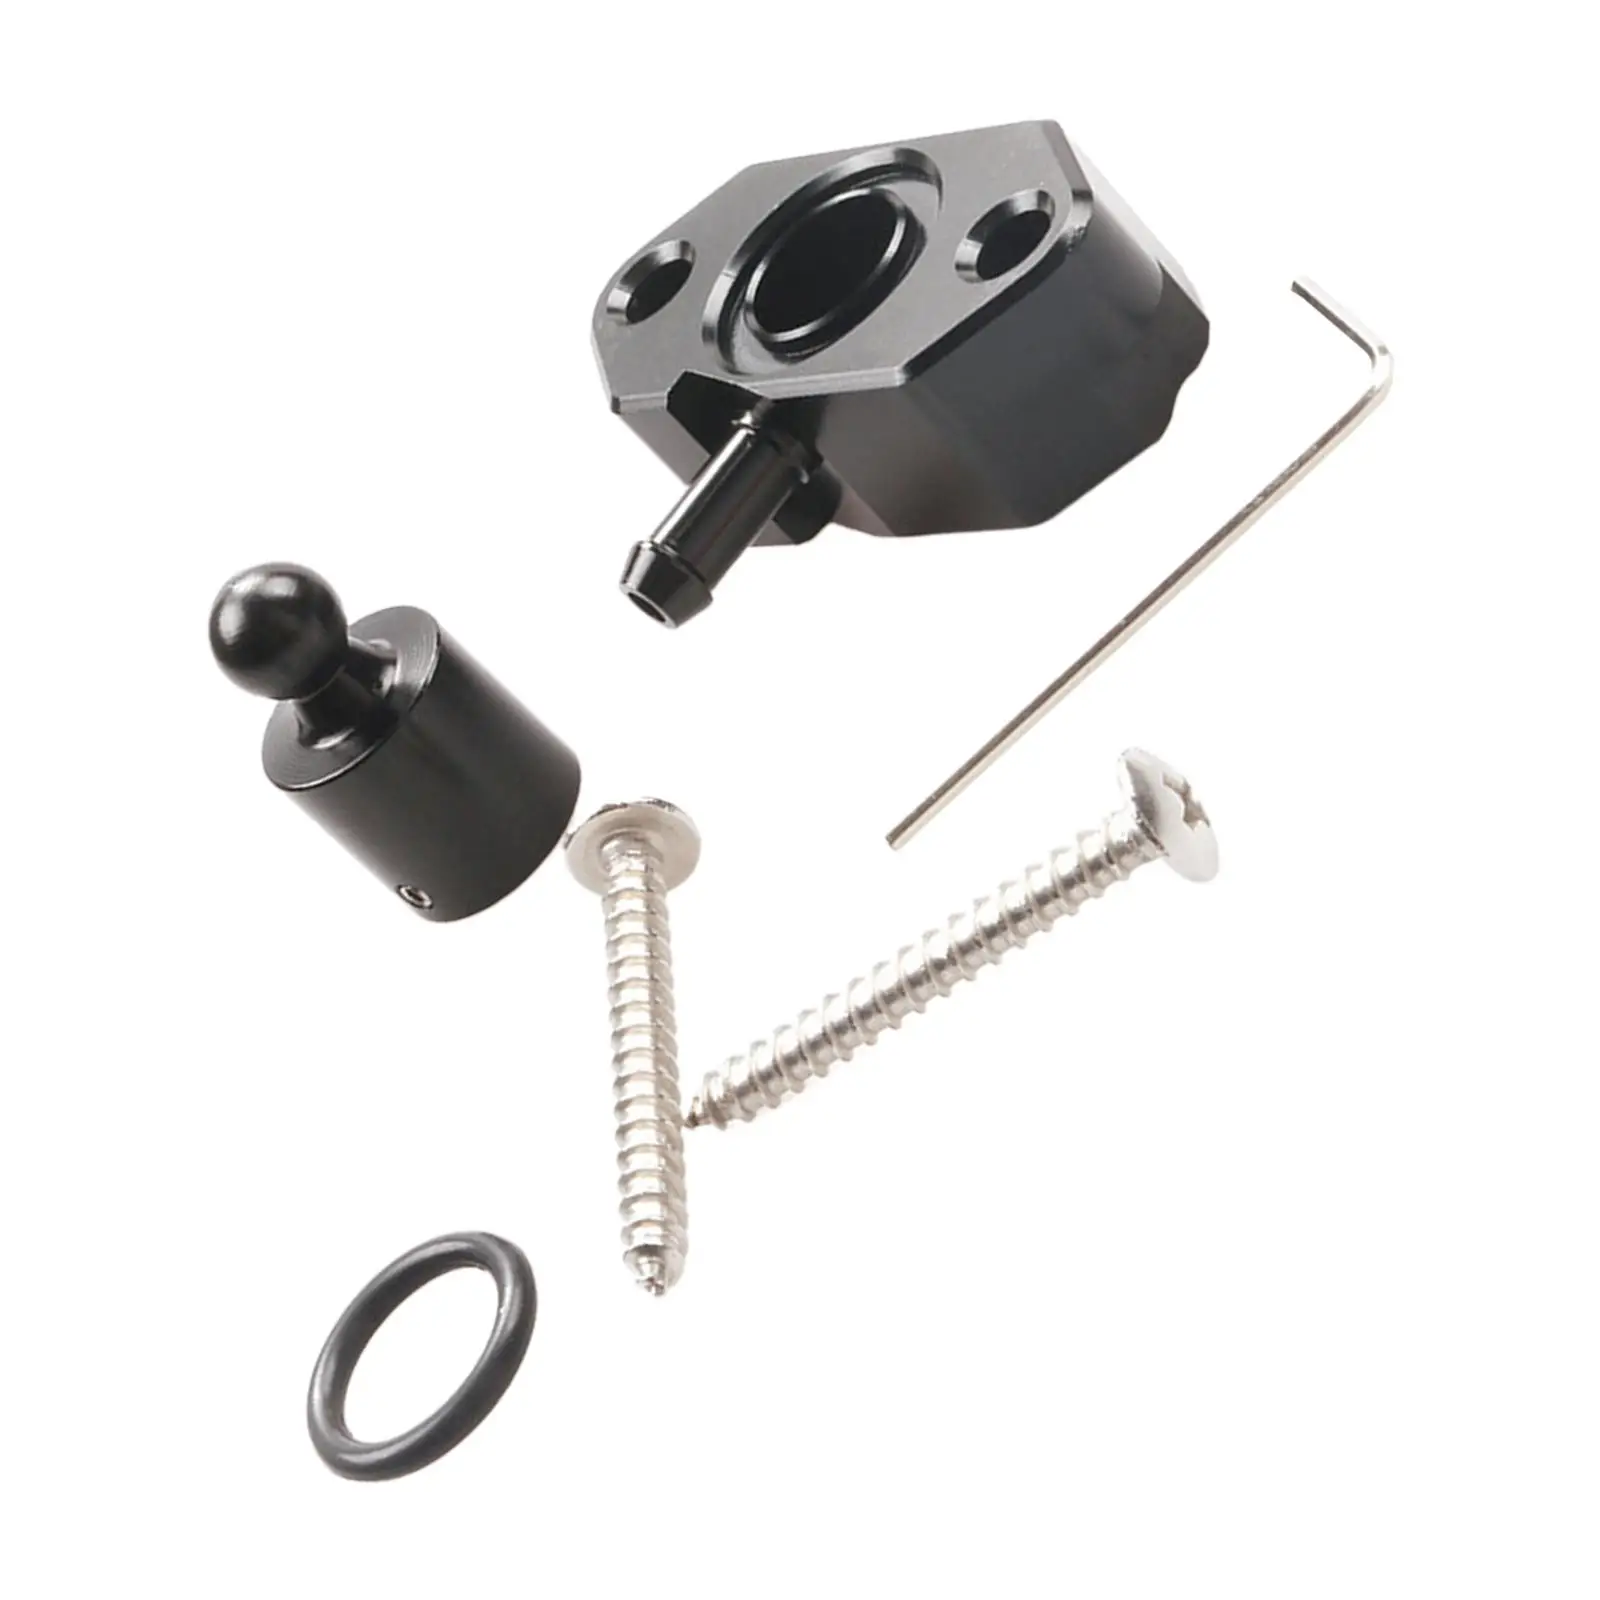 Aluminum Turbo Boost Tap Kit Vacuum Adaptor Hu-Fbov1046A Adaptor Kit for VW 1.4T Boost (Map) Sensor and Intake Manifold